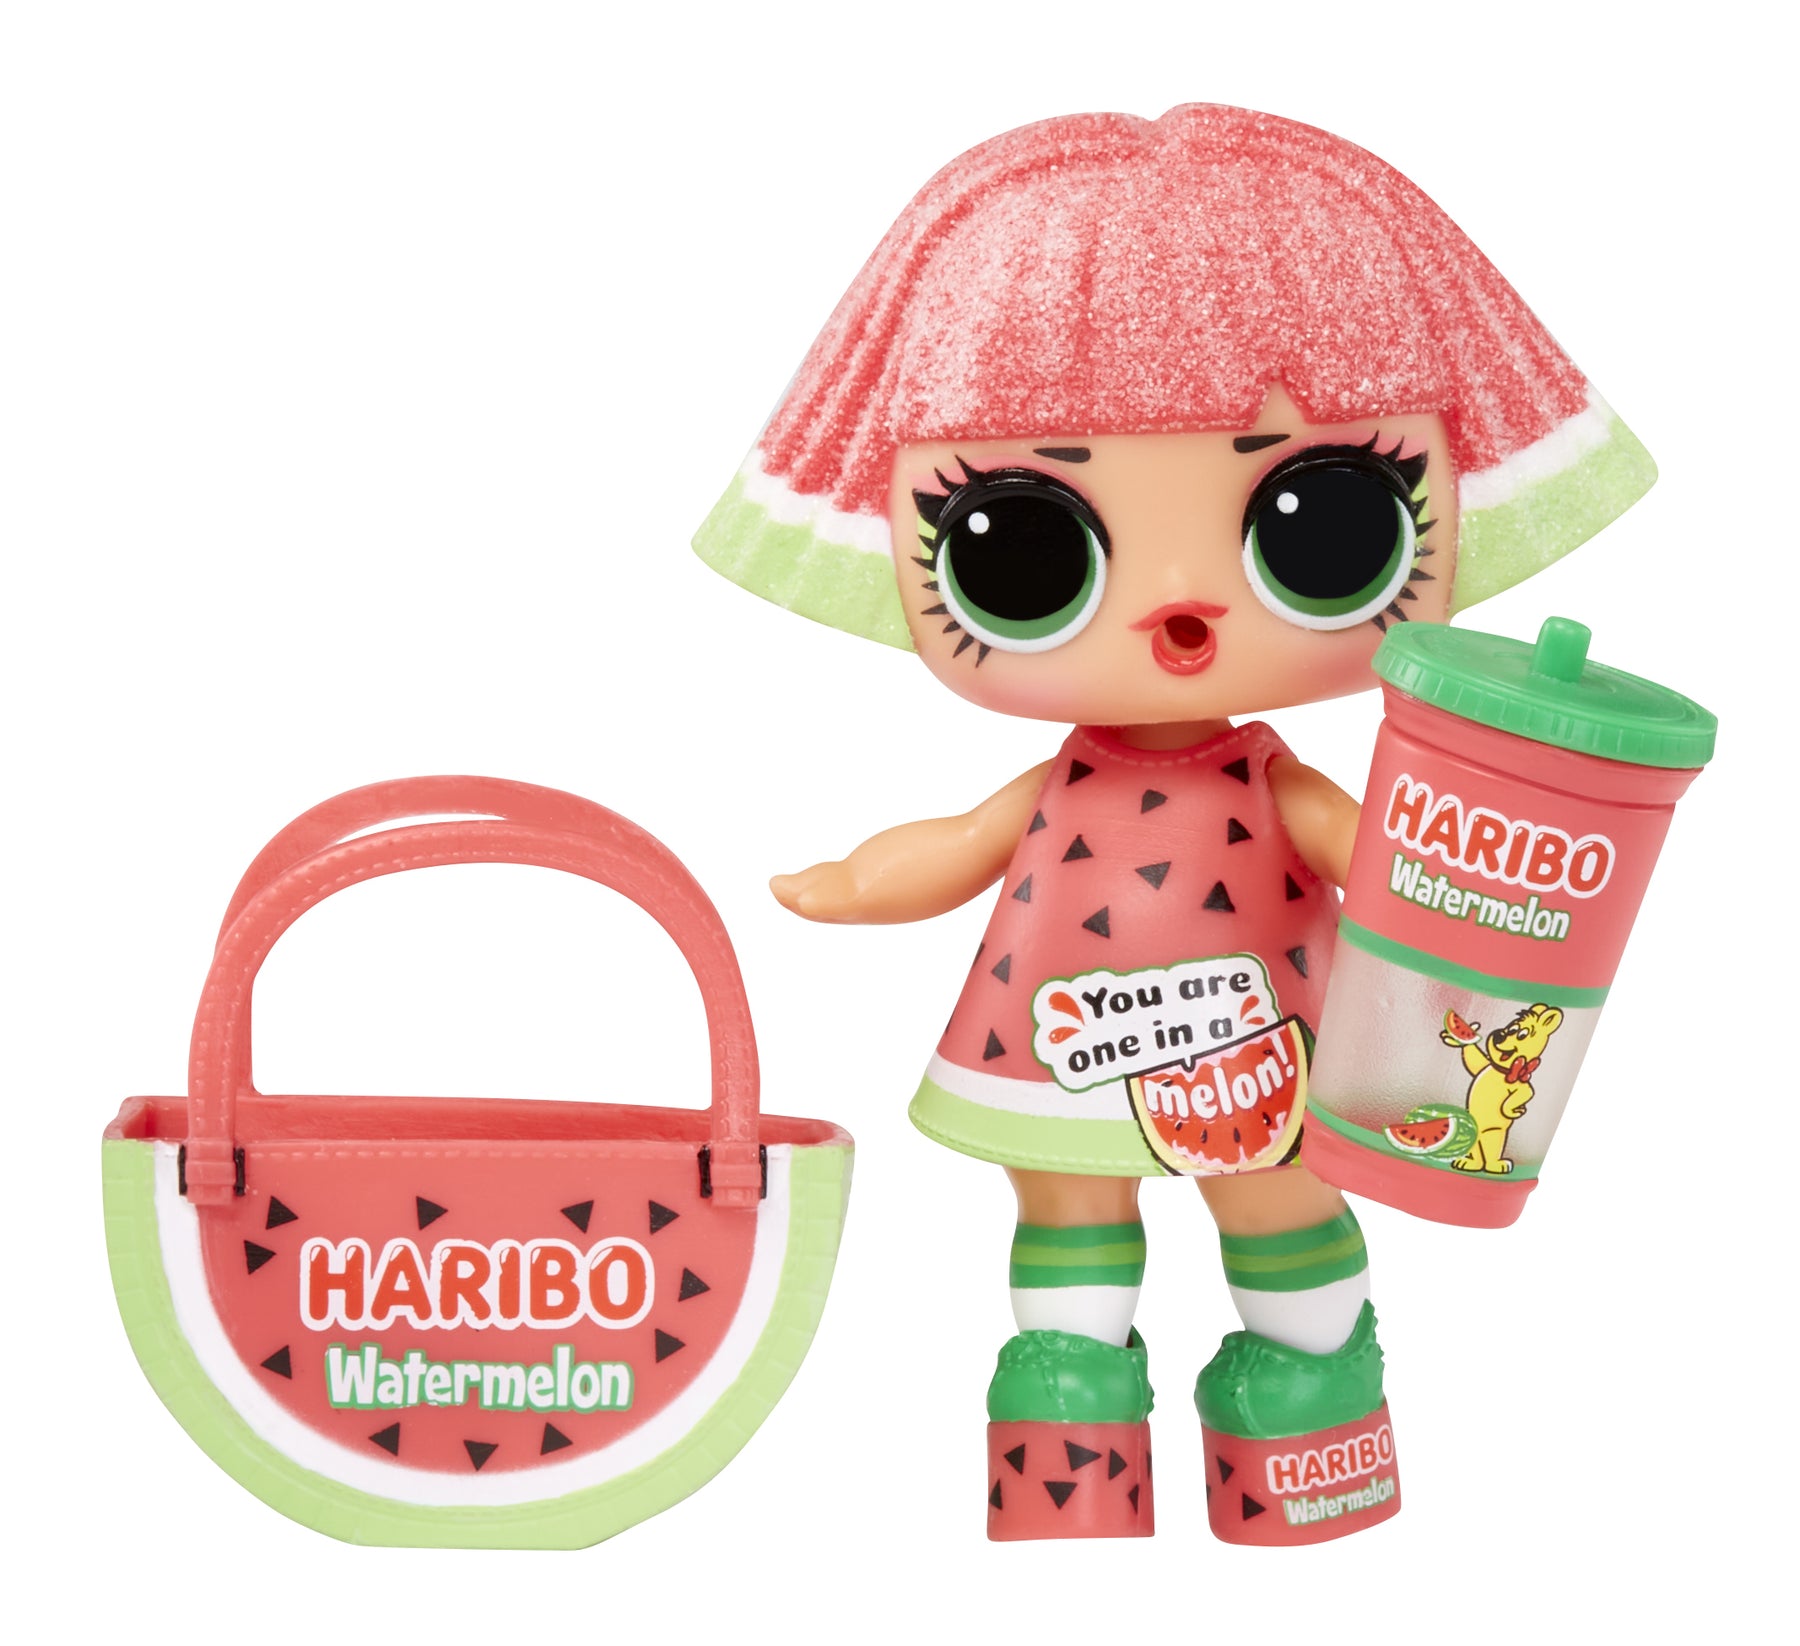 L.O.L. Surprise Mini Sweets Haribo Yllätyspallo